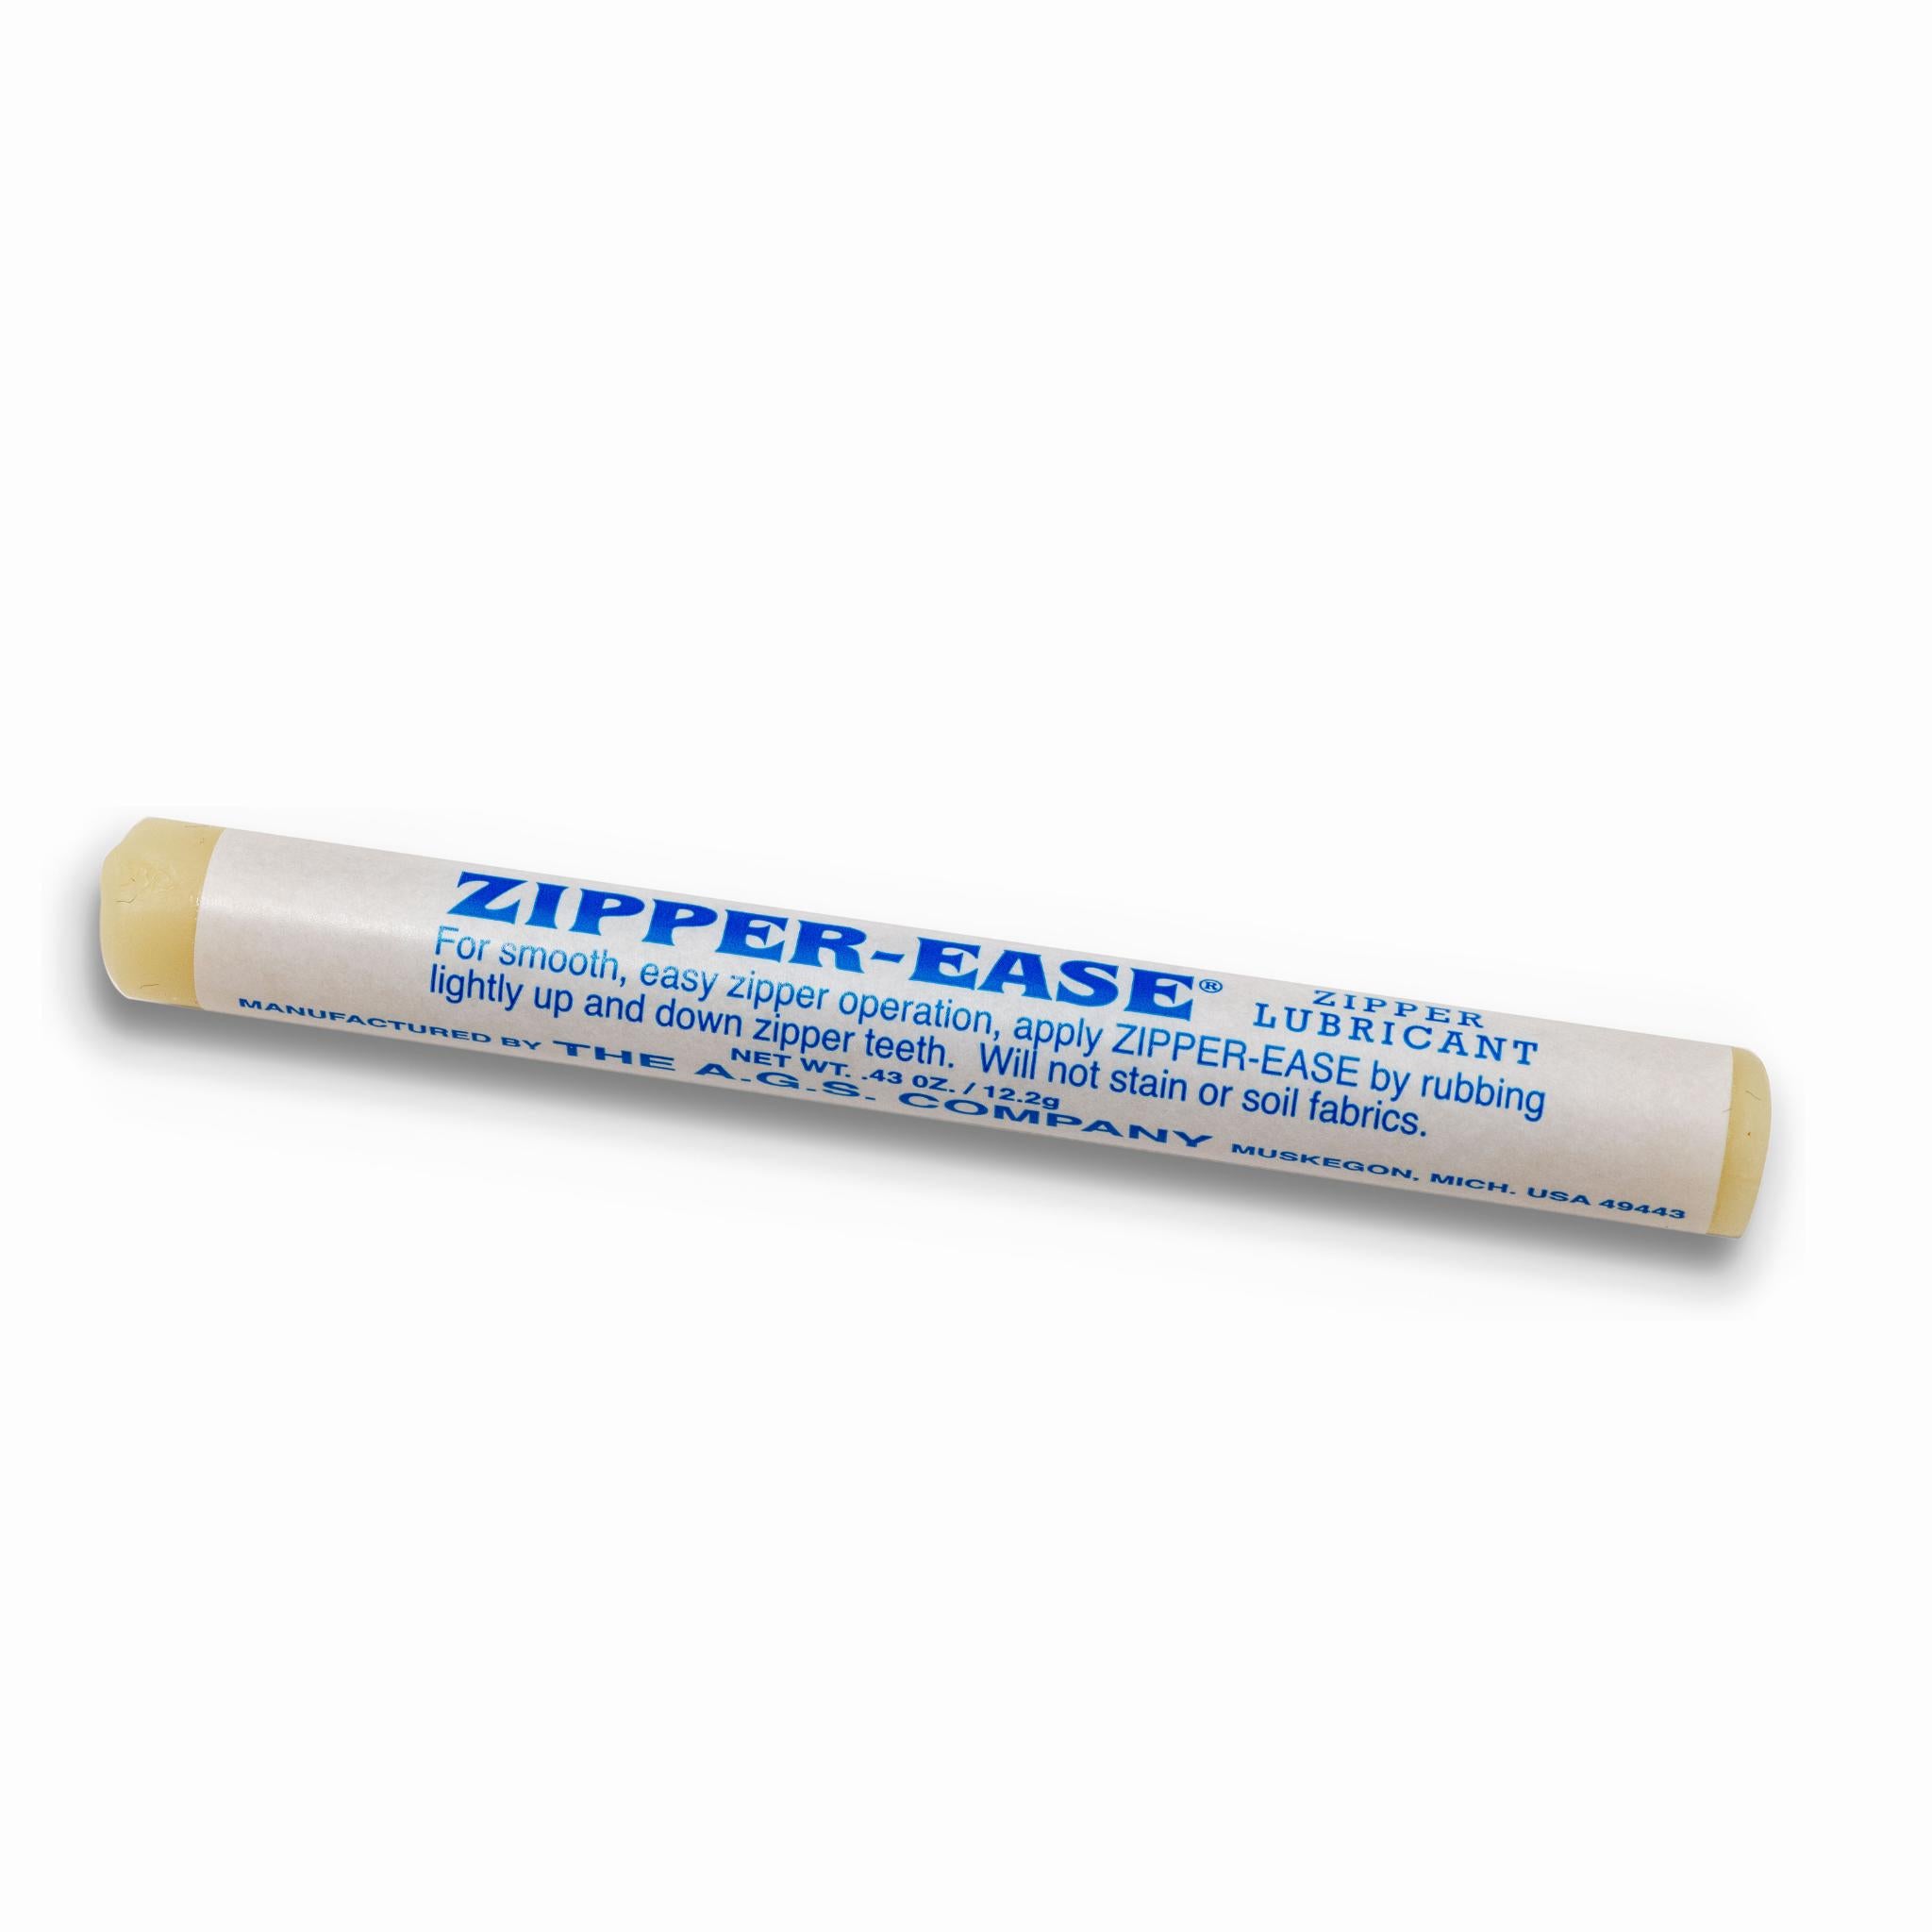 Zipper Ease Lubricant, 6,99 €